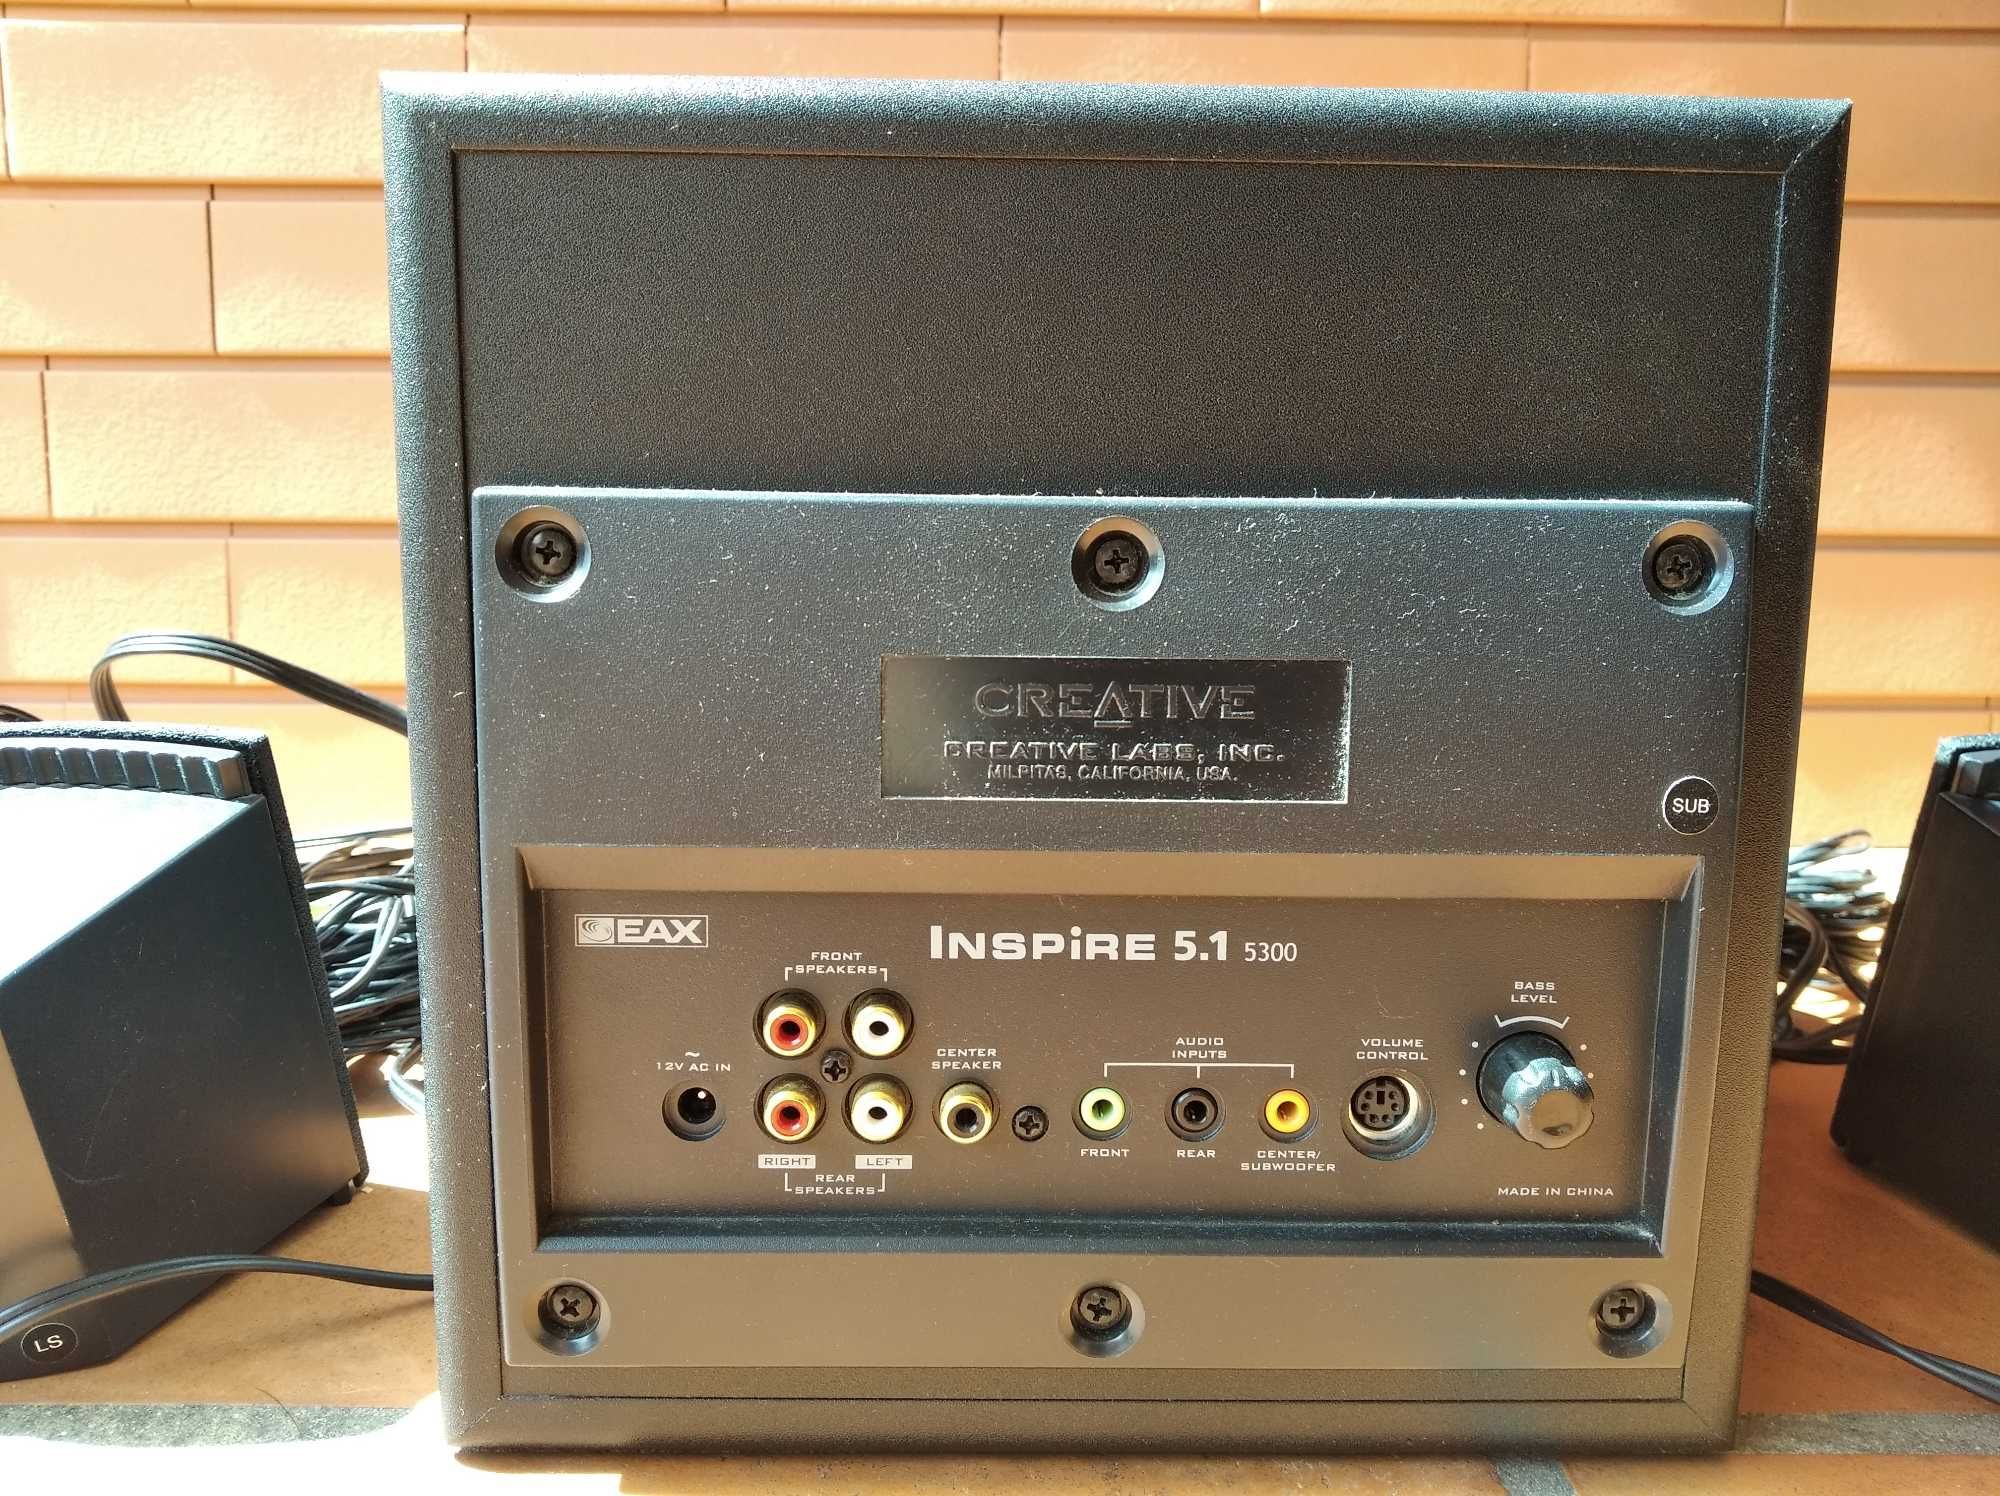 Sistema de som (Creative Inspire 5300)